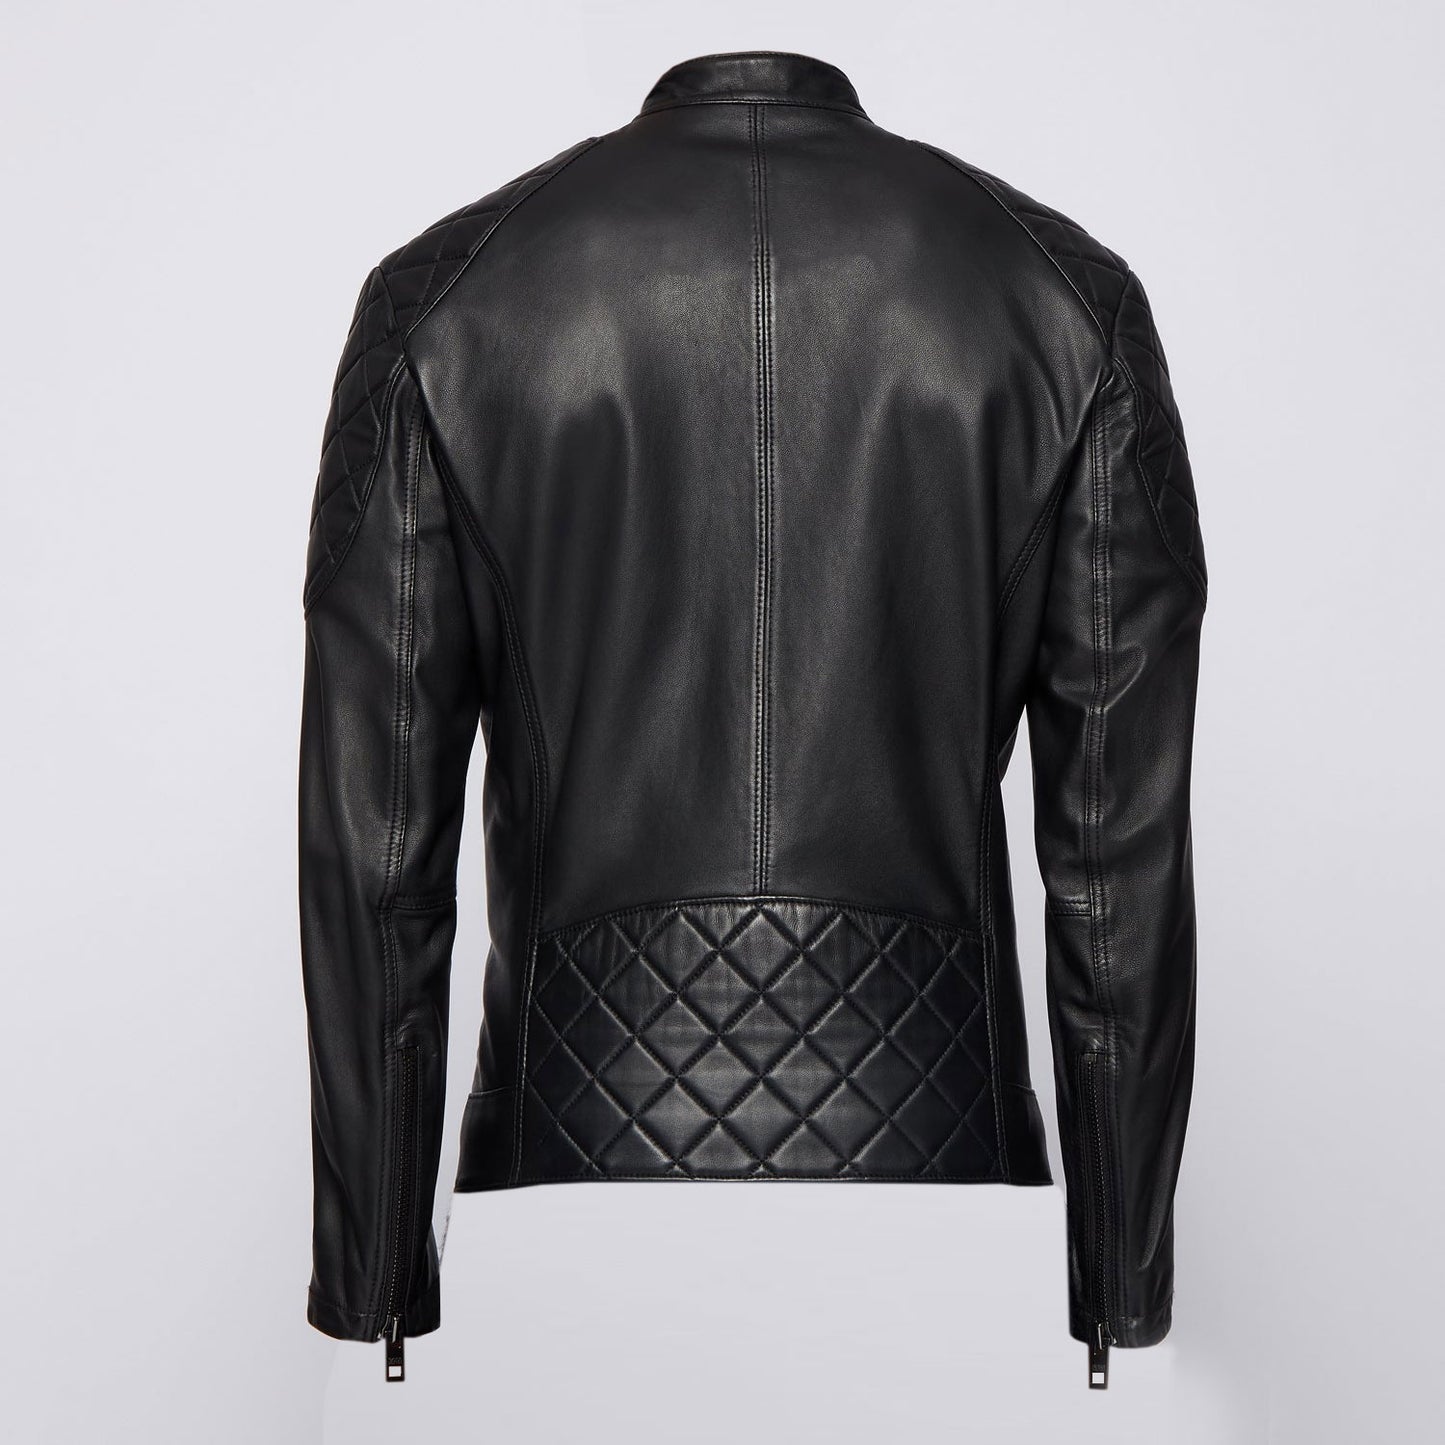 Men’s Black Leather Biker Jacket with Quilted Details